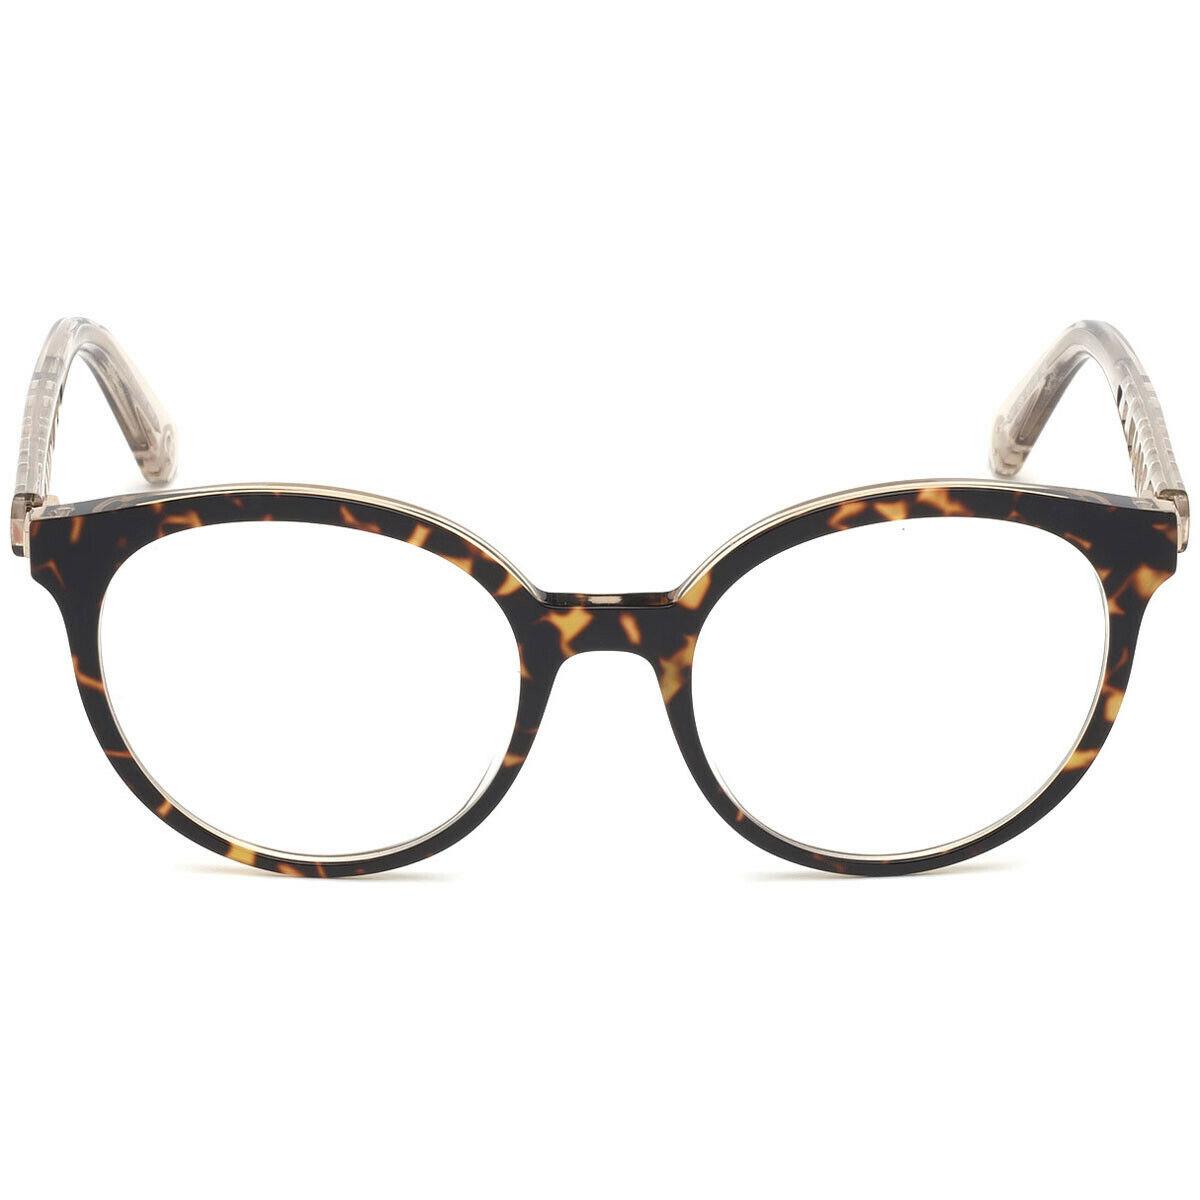 Roberto Cavalli RC 5091 Tortoise 056 Round Eyeglasses Frame 51-19-140 Italy